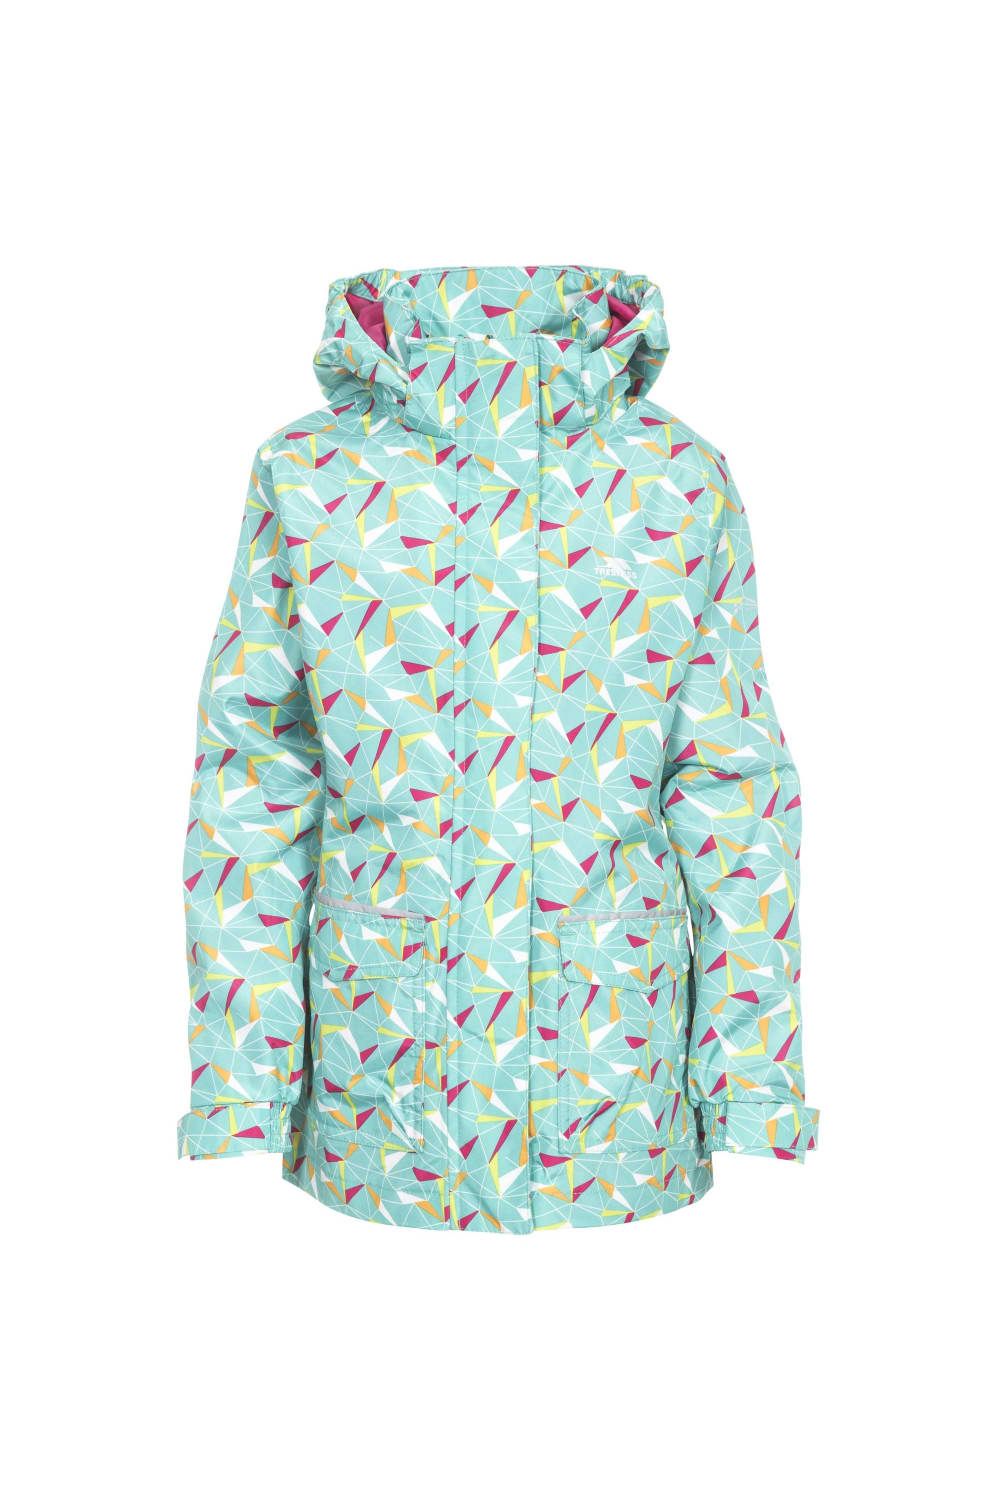 Trespass Childrens Girls Twinkling Waterproof Jacket (Lagoon)